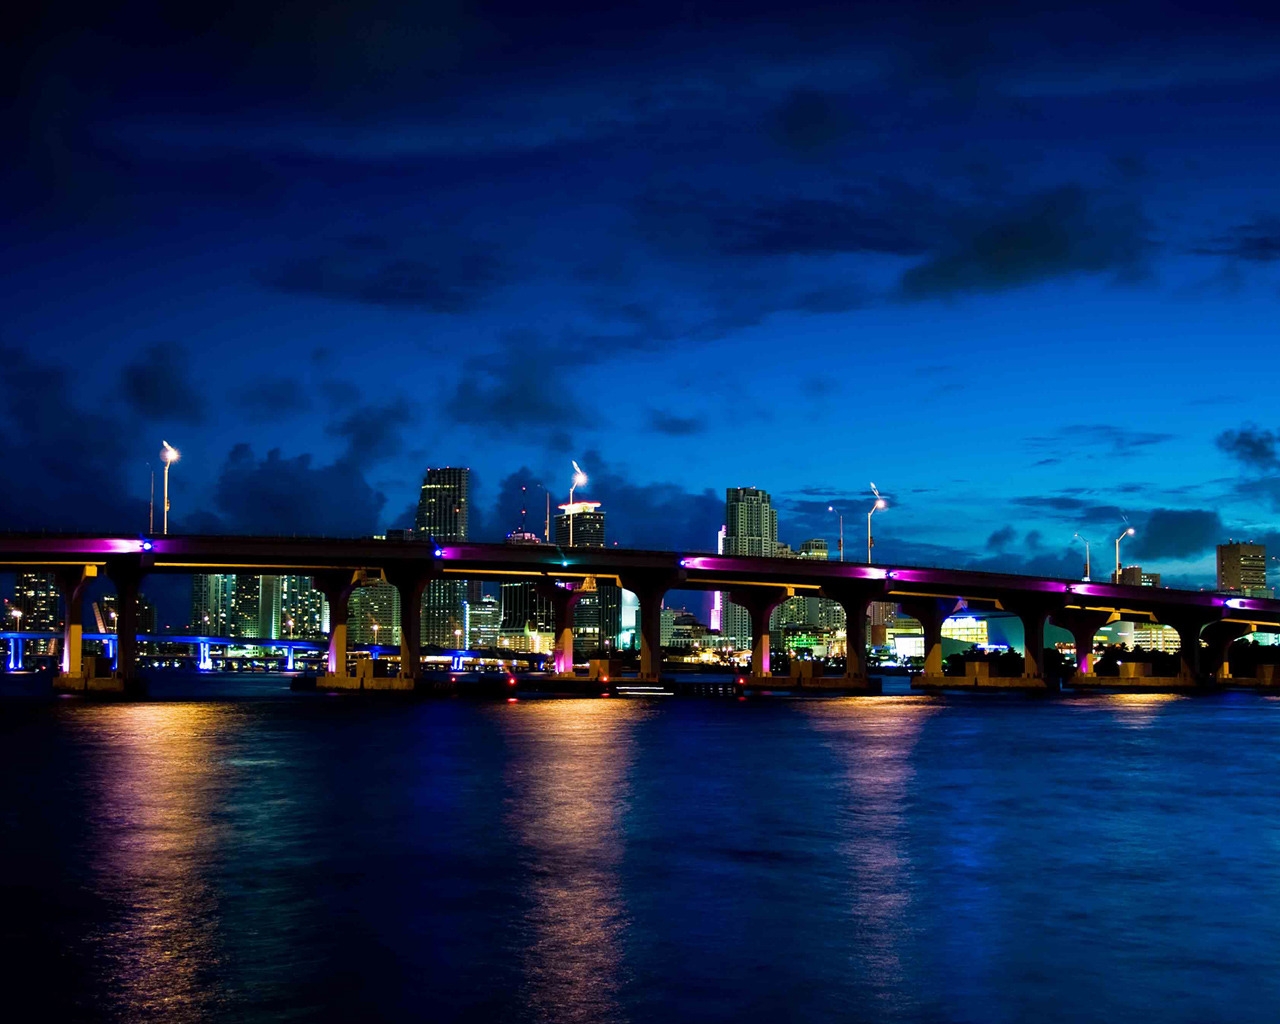 Miami Night for 1280 x 1024 resolution